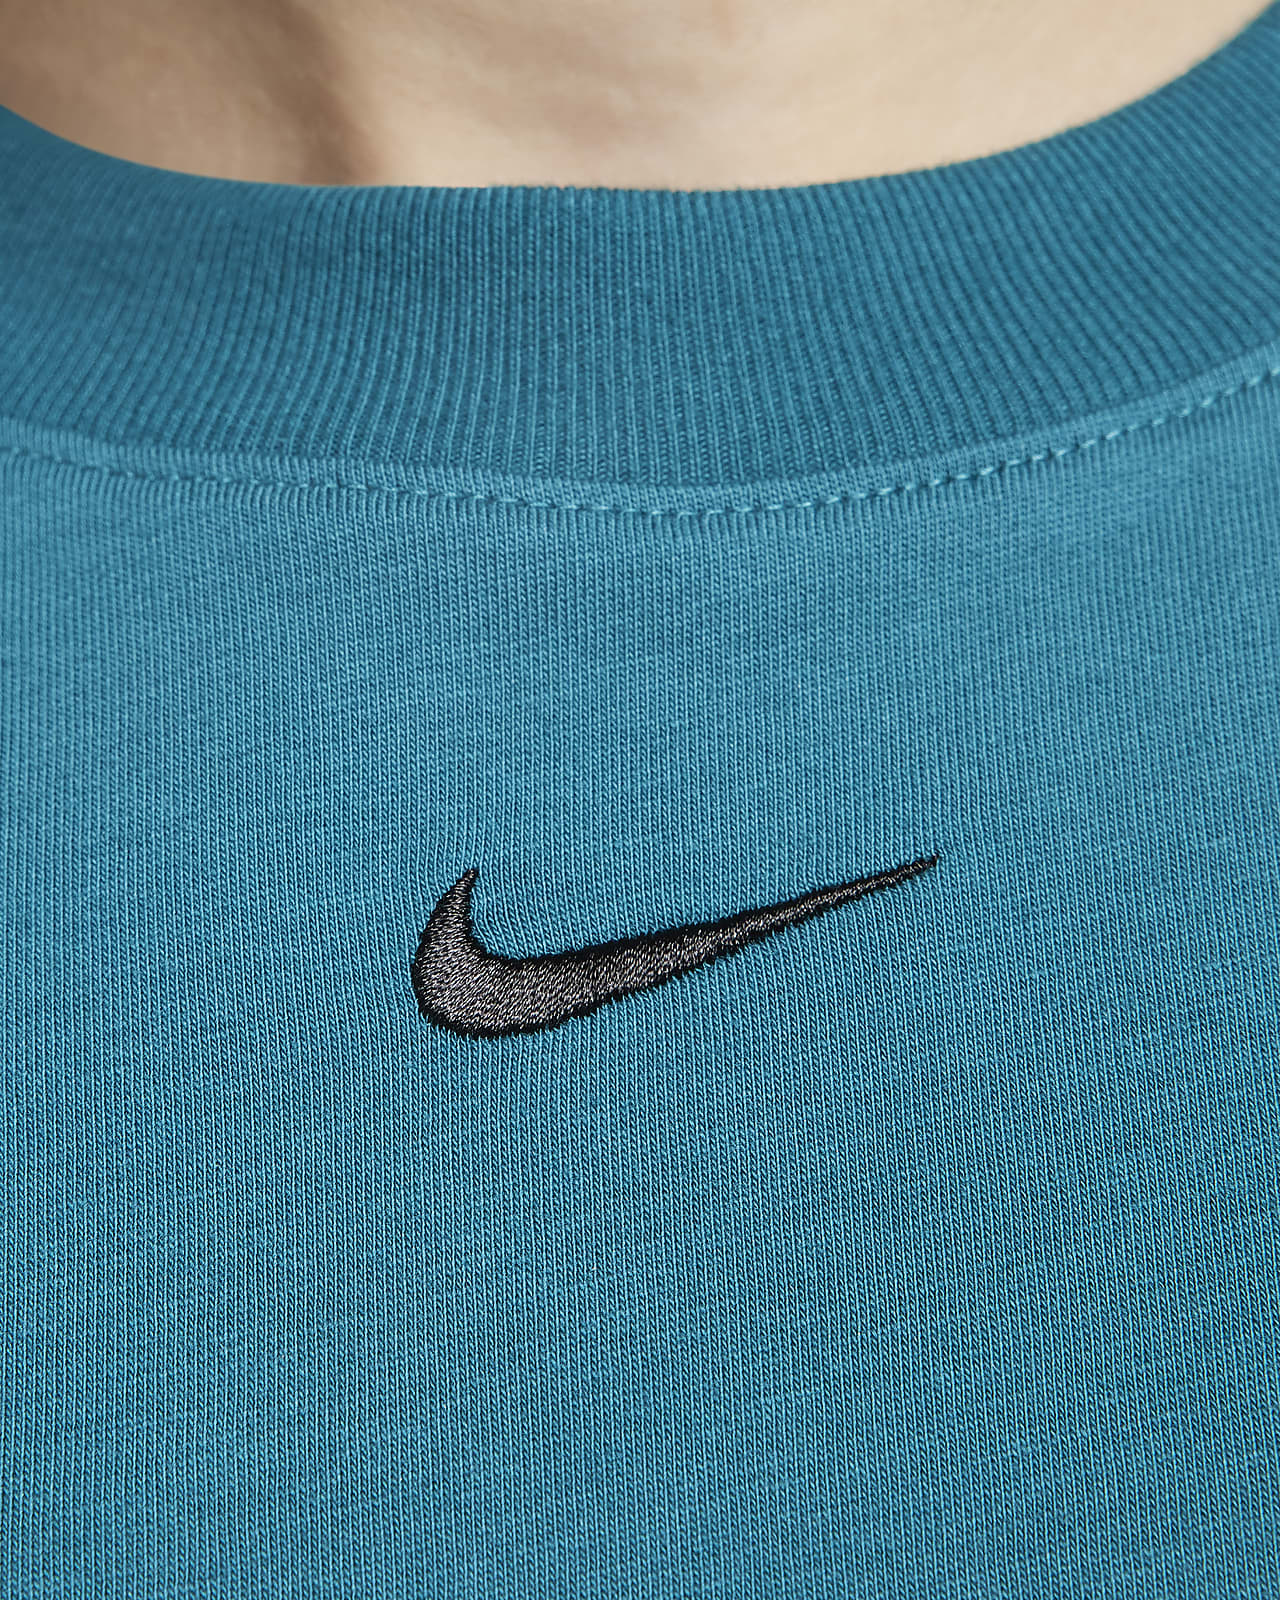 T-shirt femme Nike court advantage - Nike - Marques - Textile